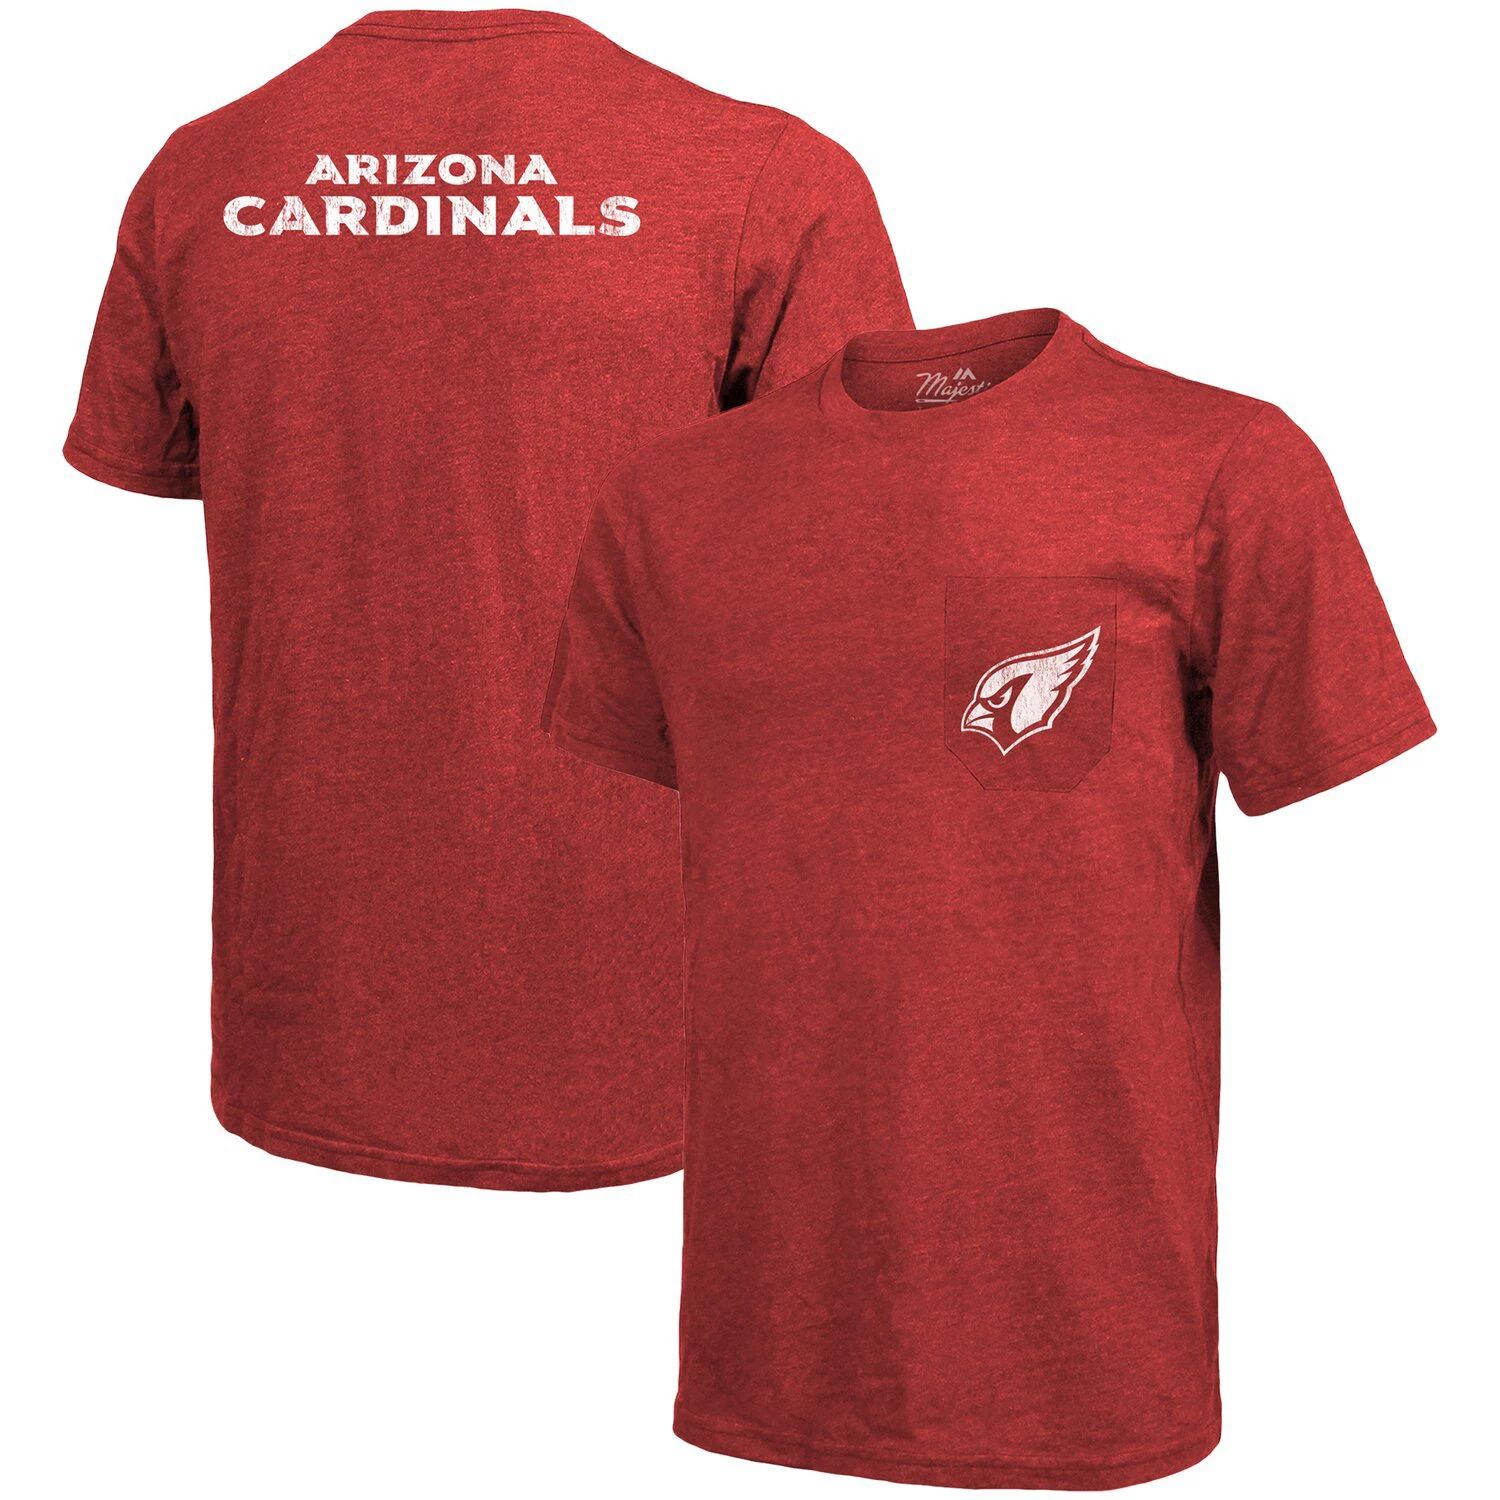 Футболка с карманами Tri-Blend Arizona Cardinals Threads - Cardinal Majestic футболка с карманами arizona cardinals tri blend cardinal majestic красный